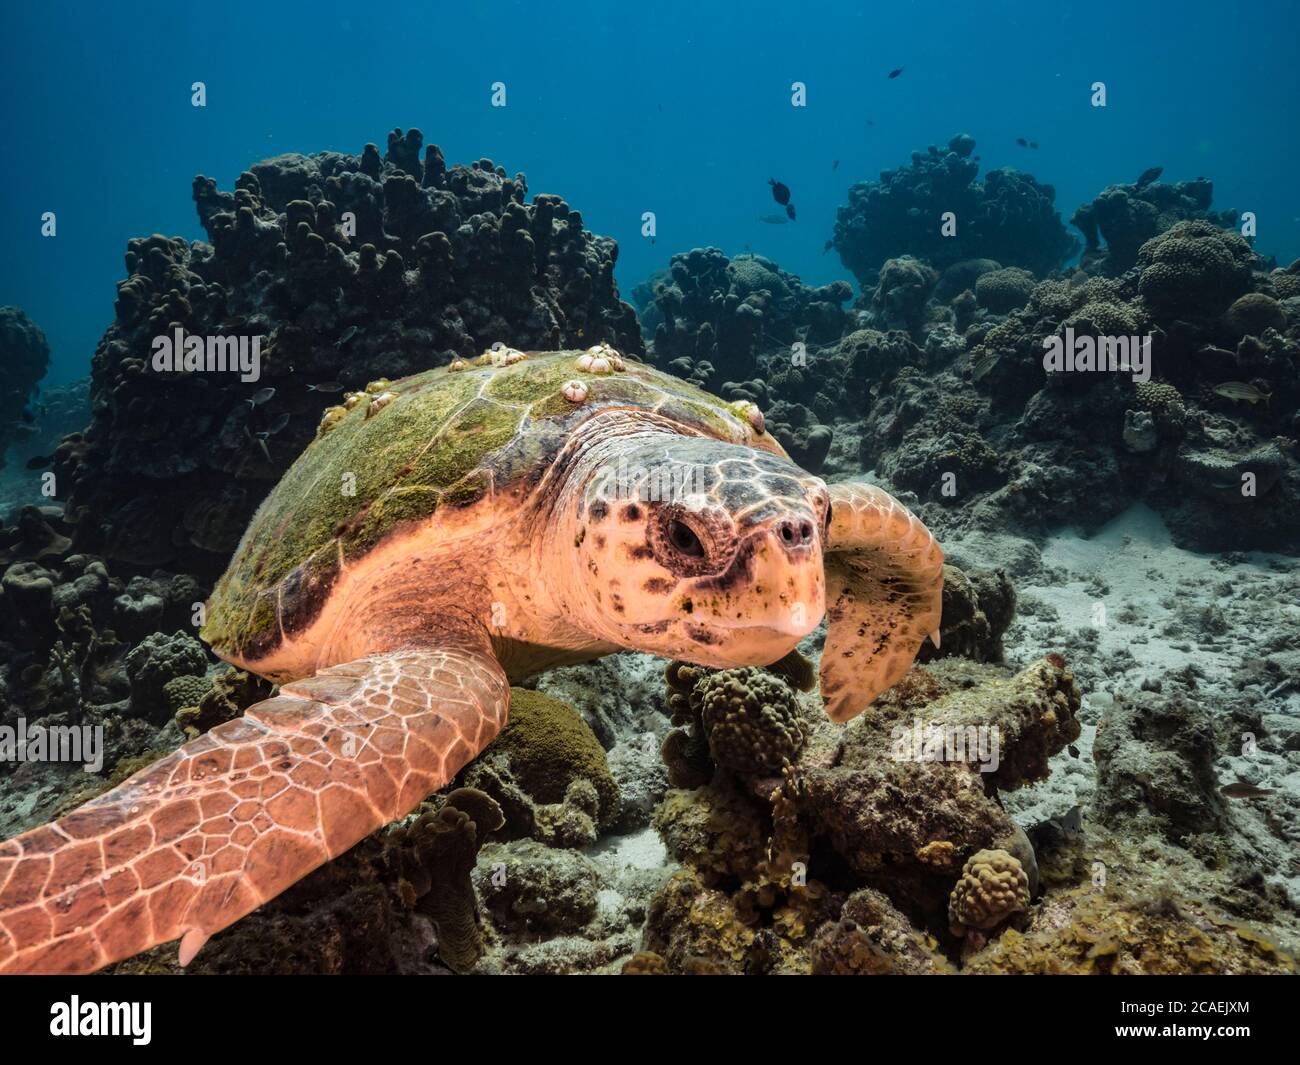 Loggerhead Sea Turtle swim in turquoise water of coral reef - Caribbean Sea / Curacao Stock Photo